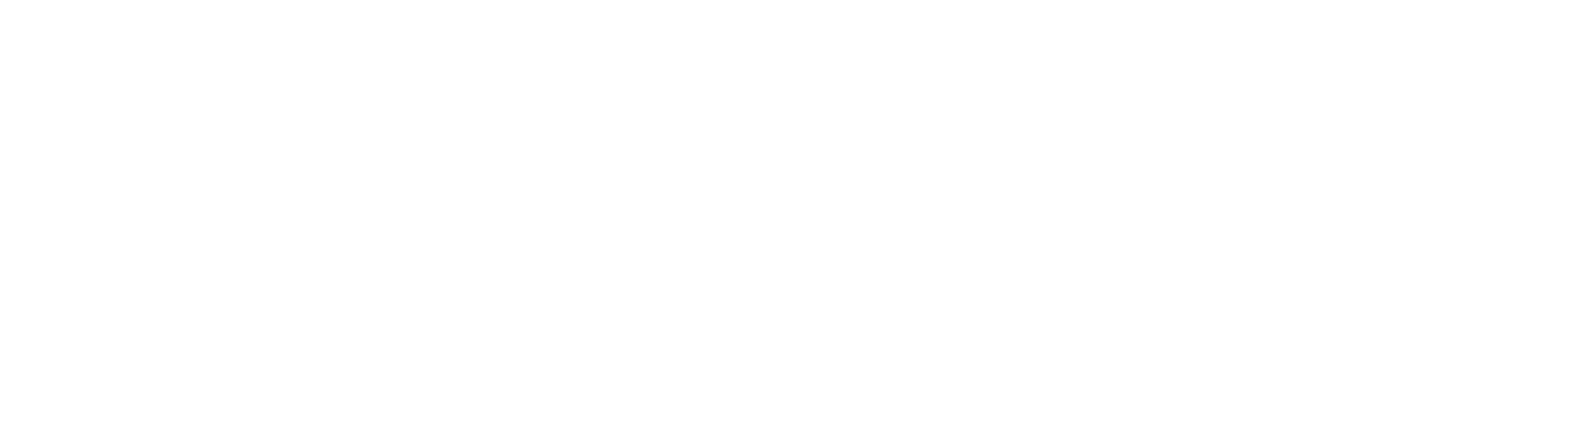 easycash logo white